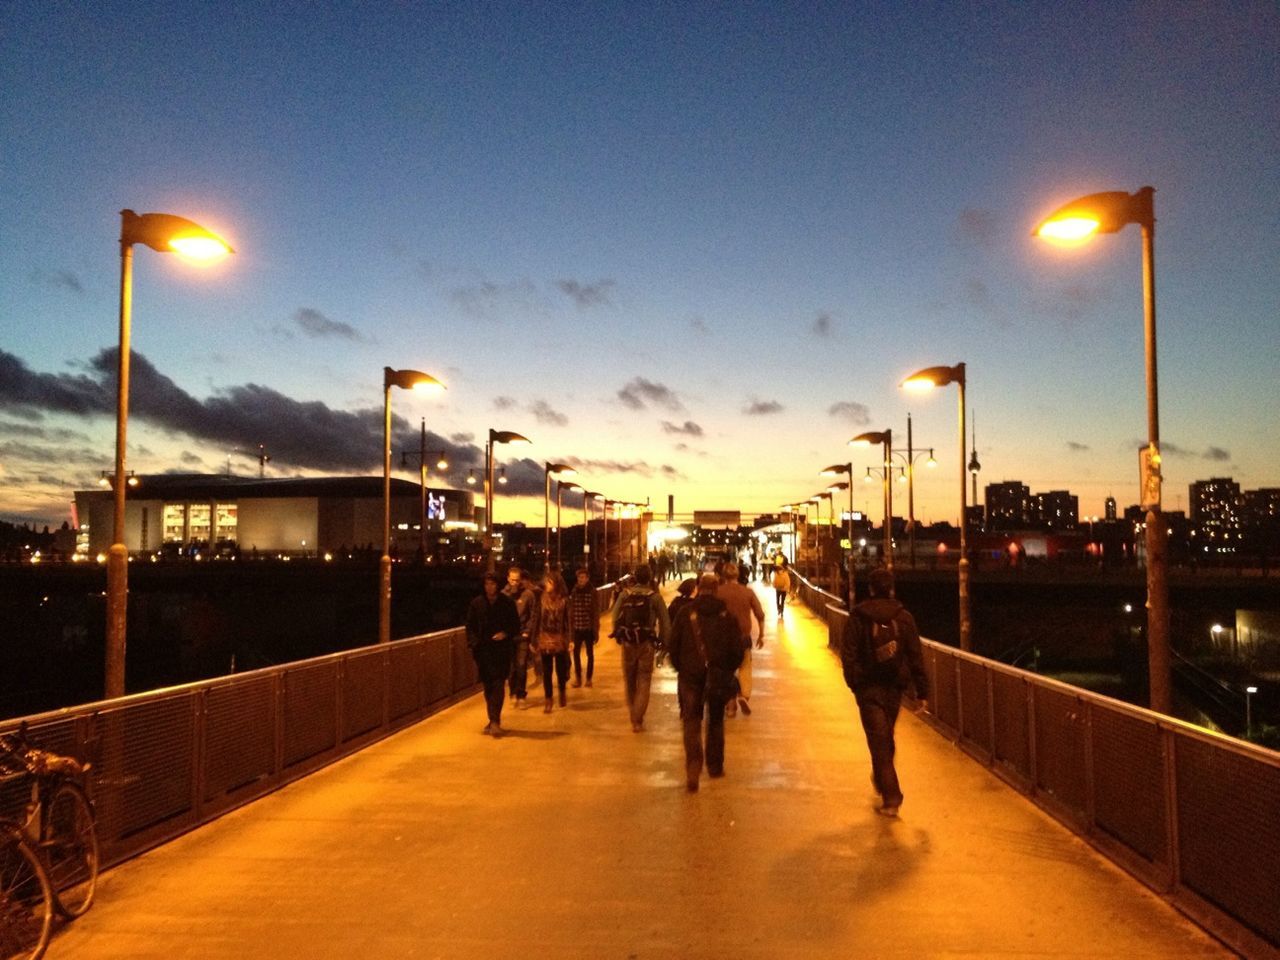 People walking on illuminated bridge at dusk